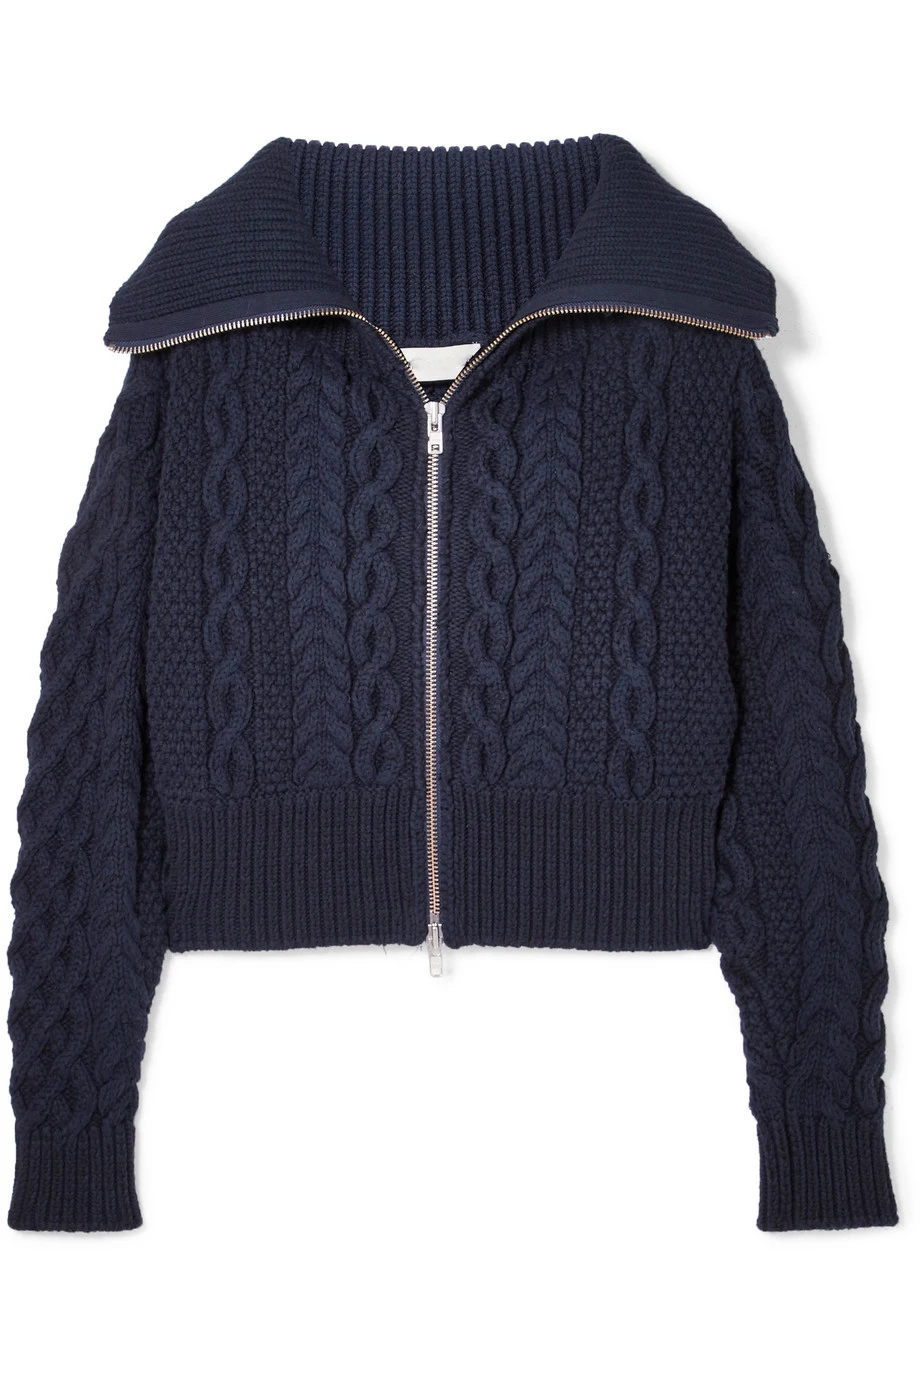 sweaters zipper front